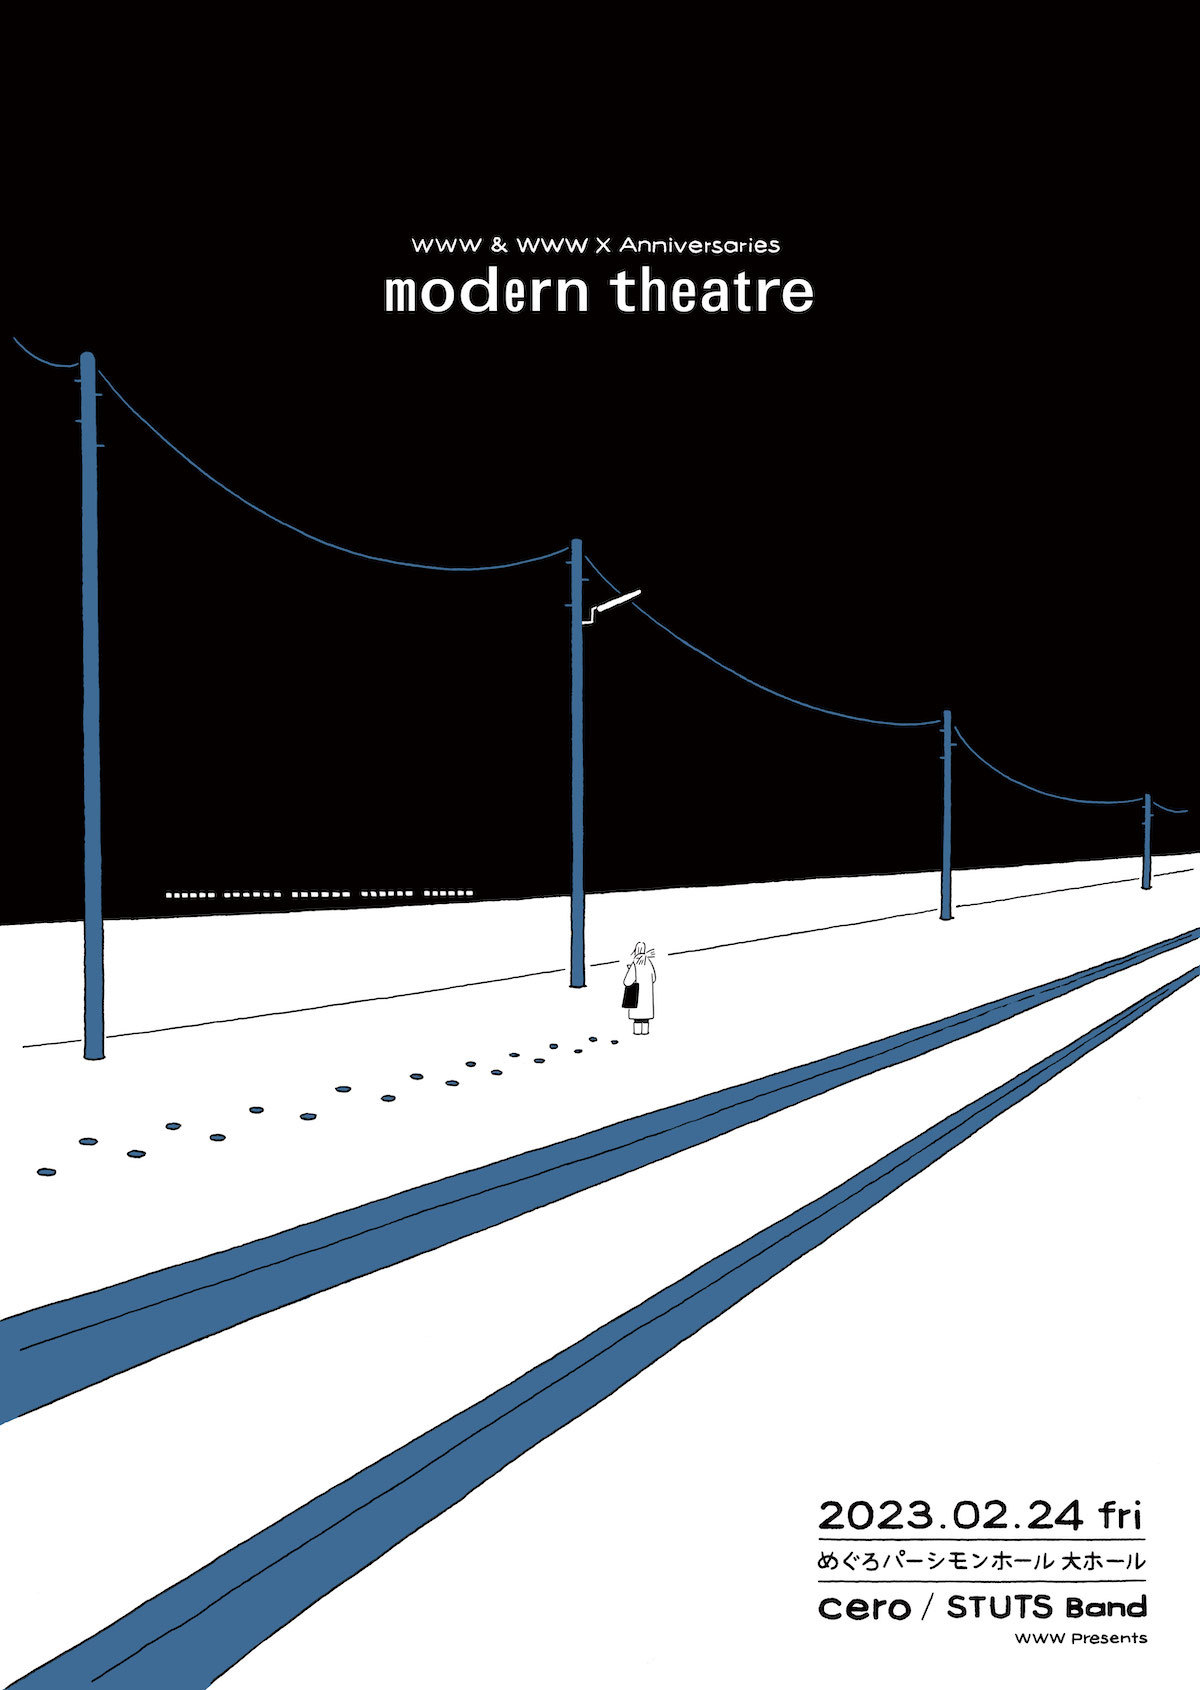 『modern theatre』　Illustration by Saki Obata